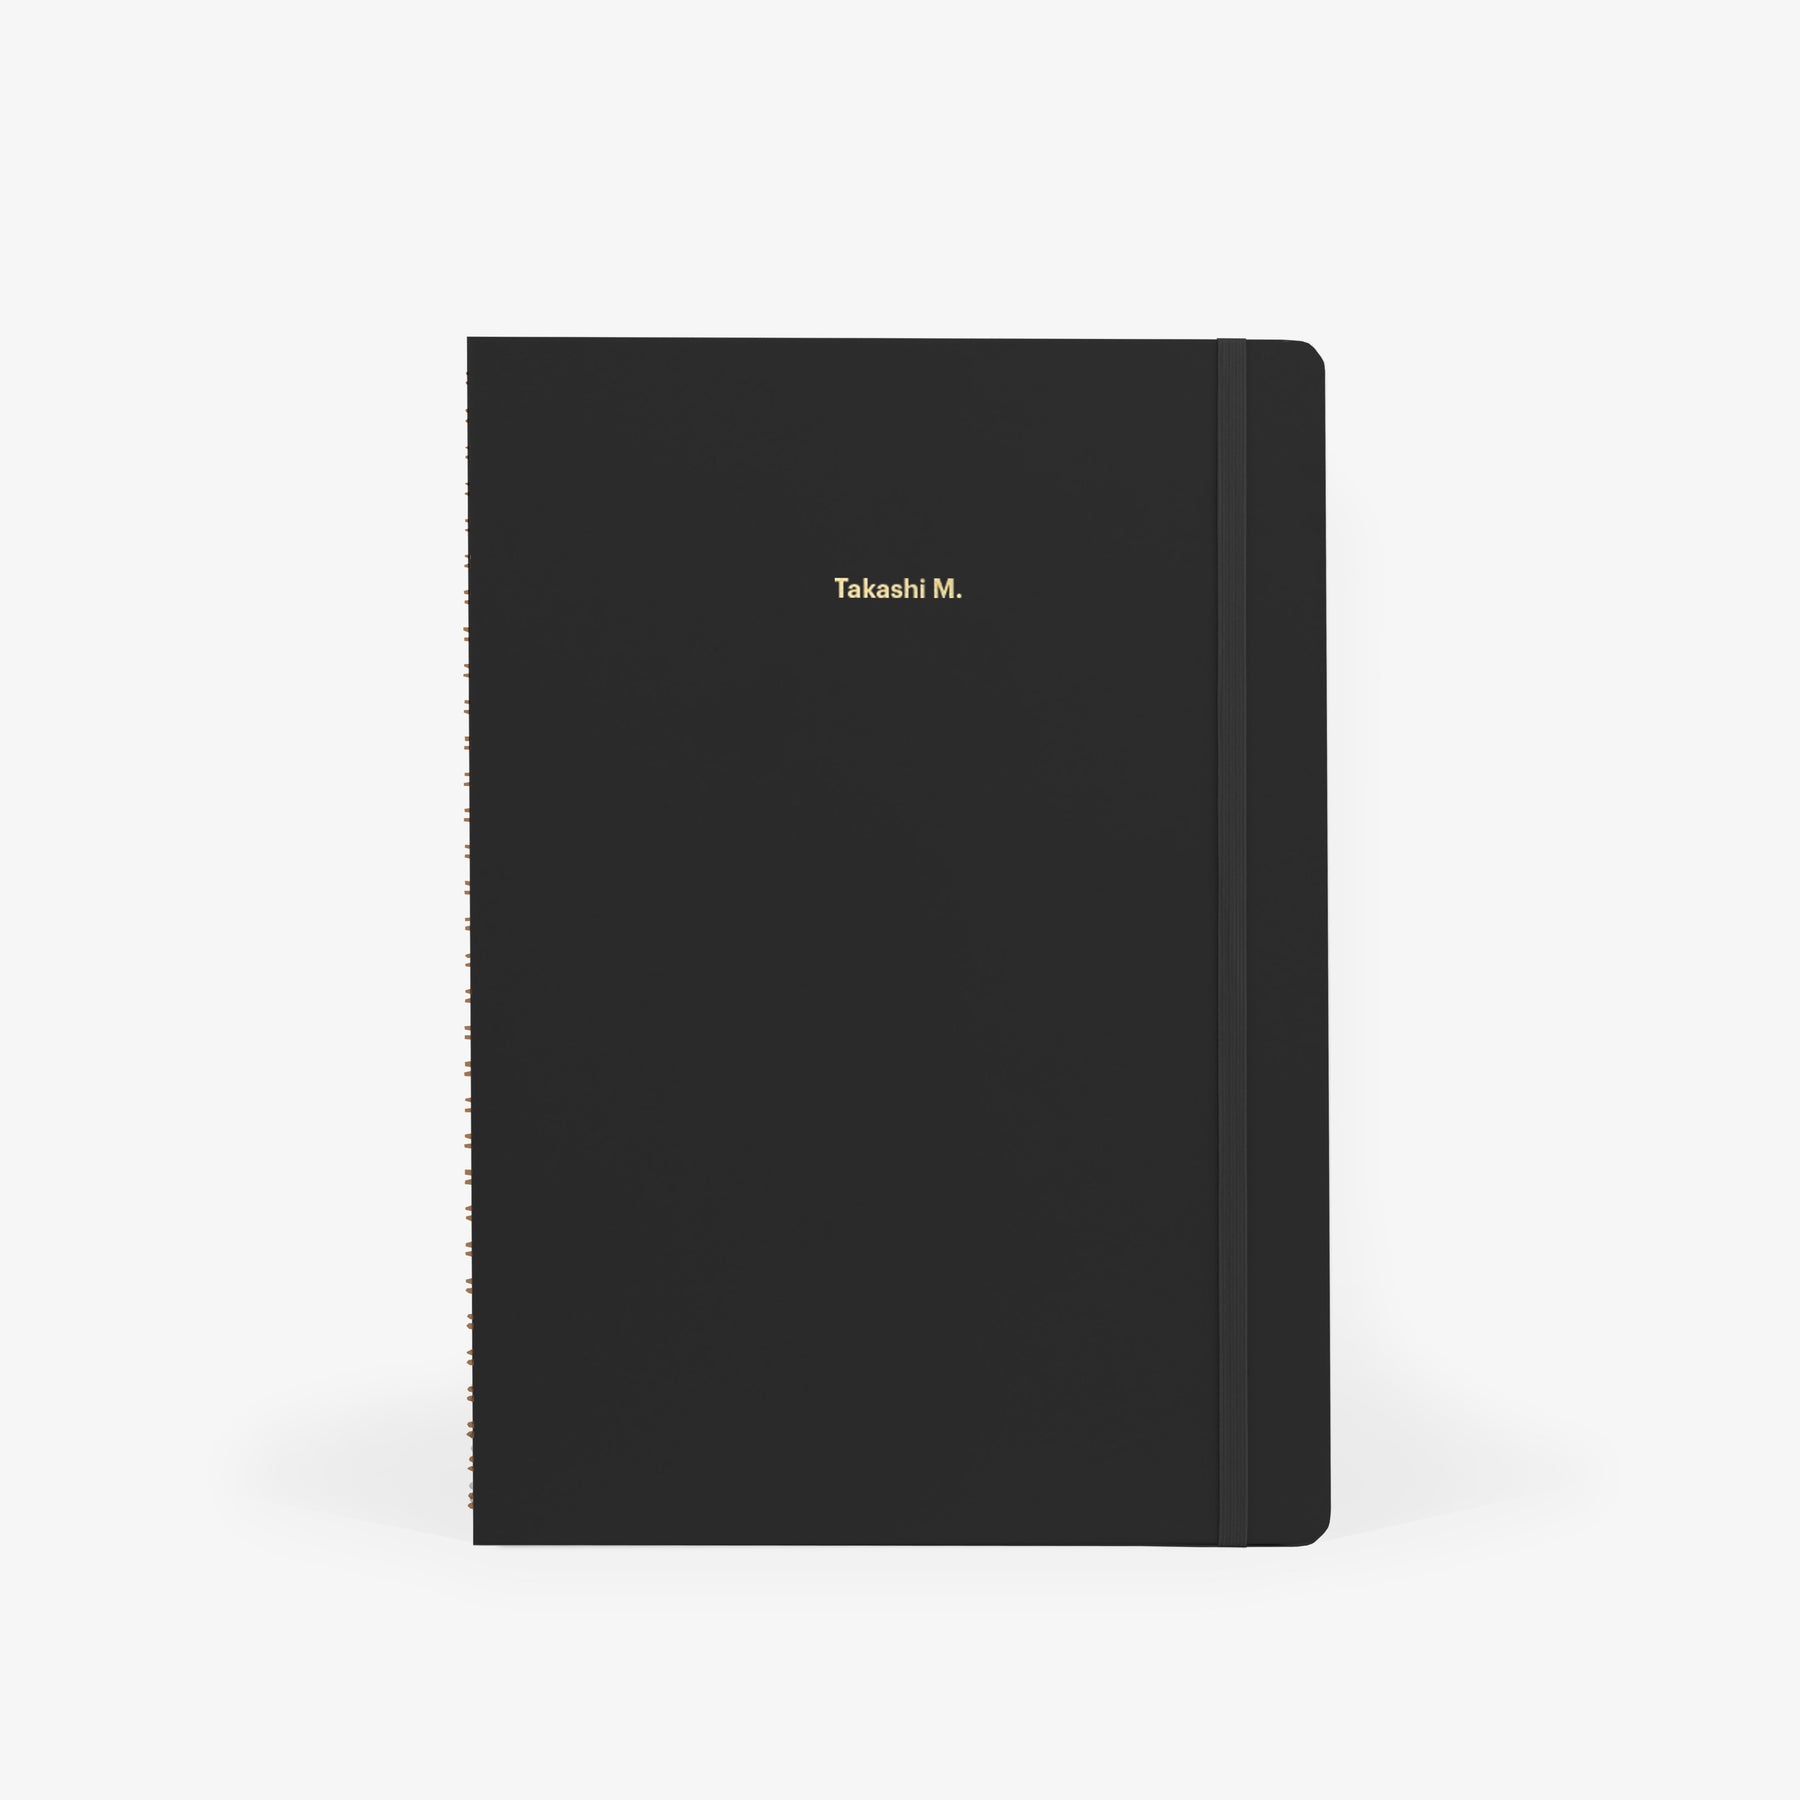 Black Paper Notebook Sketchbook, Hardcover Journal With Black